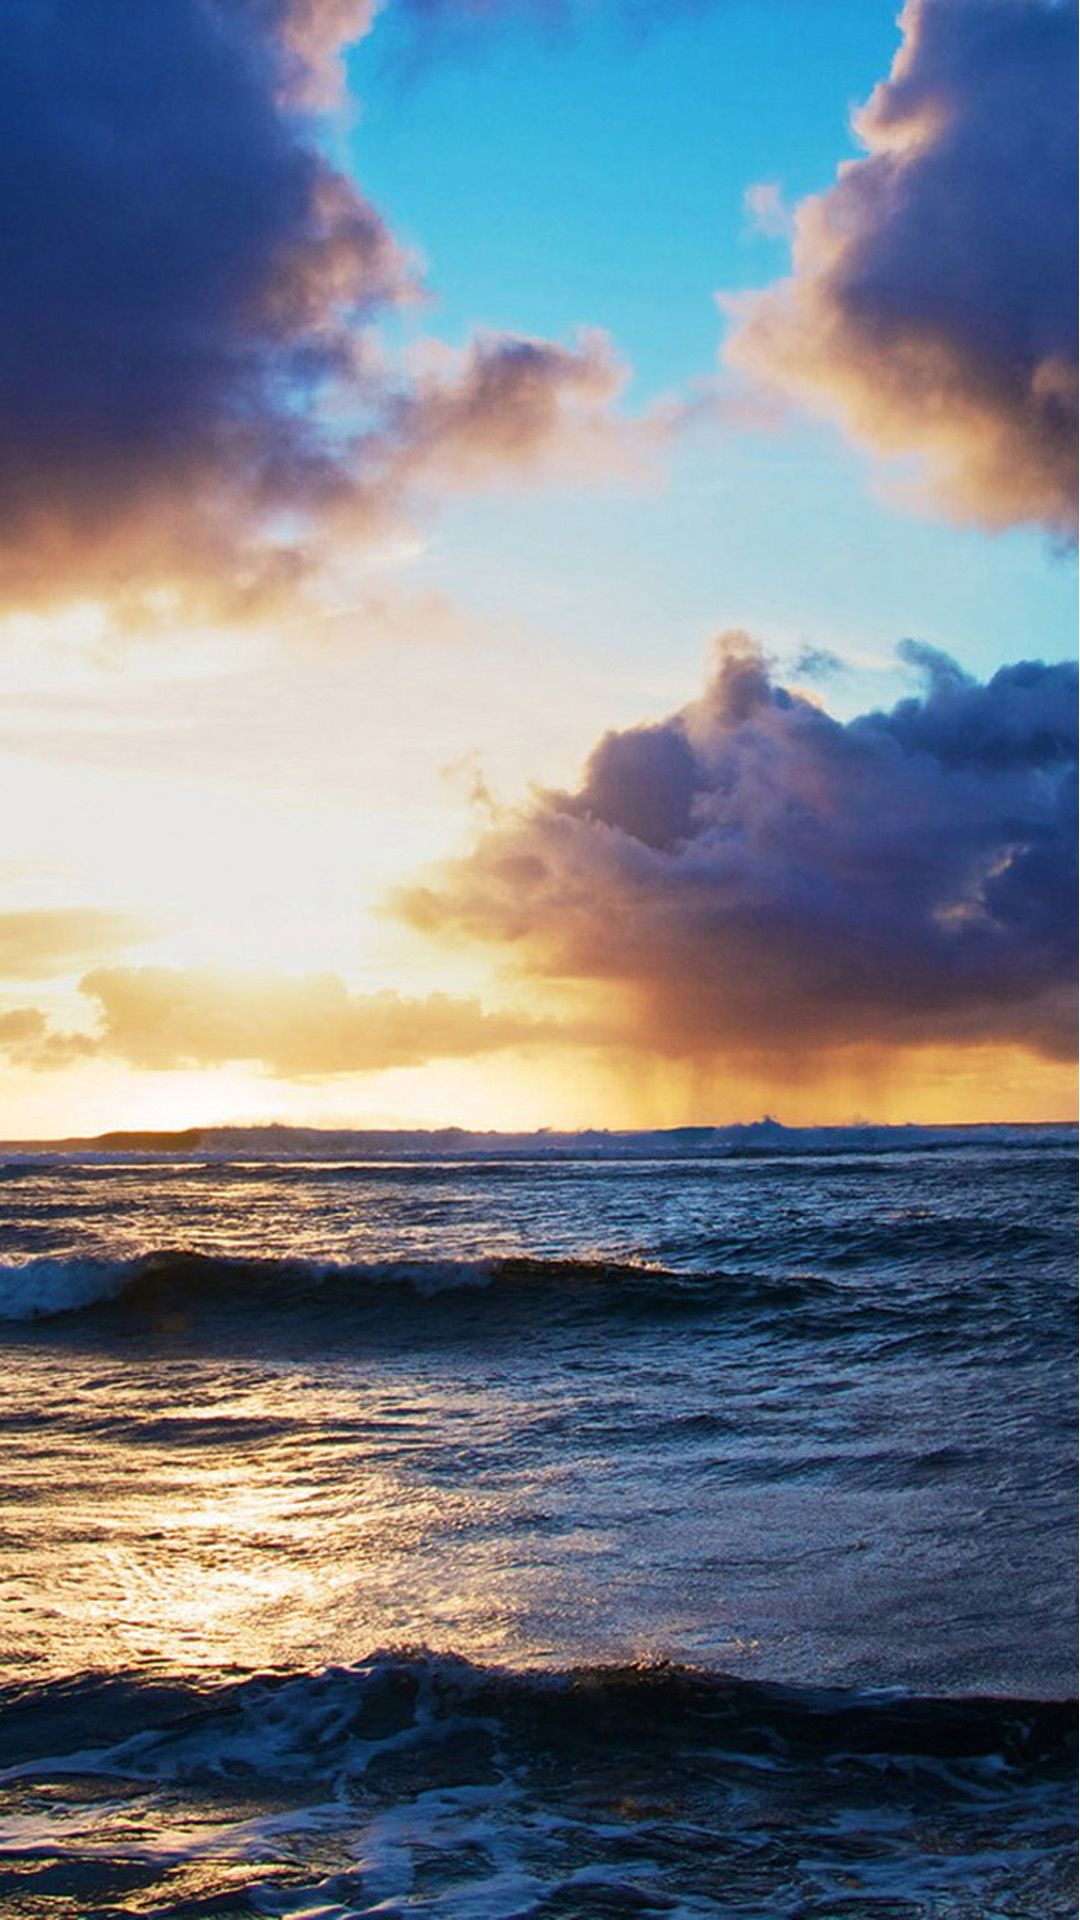 1080x1920 Ocean Beach Surging Wave Cloudy Sunny Skyscape iPhone 6 Wallpaper Download | iPhone Wallpa&acirc;&#128;&brvbar; | Wallpaper iphone summer, Beach phone wallpaper, Best iphone wallpapers